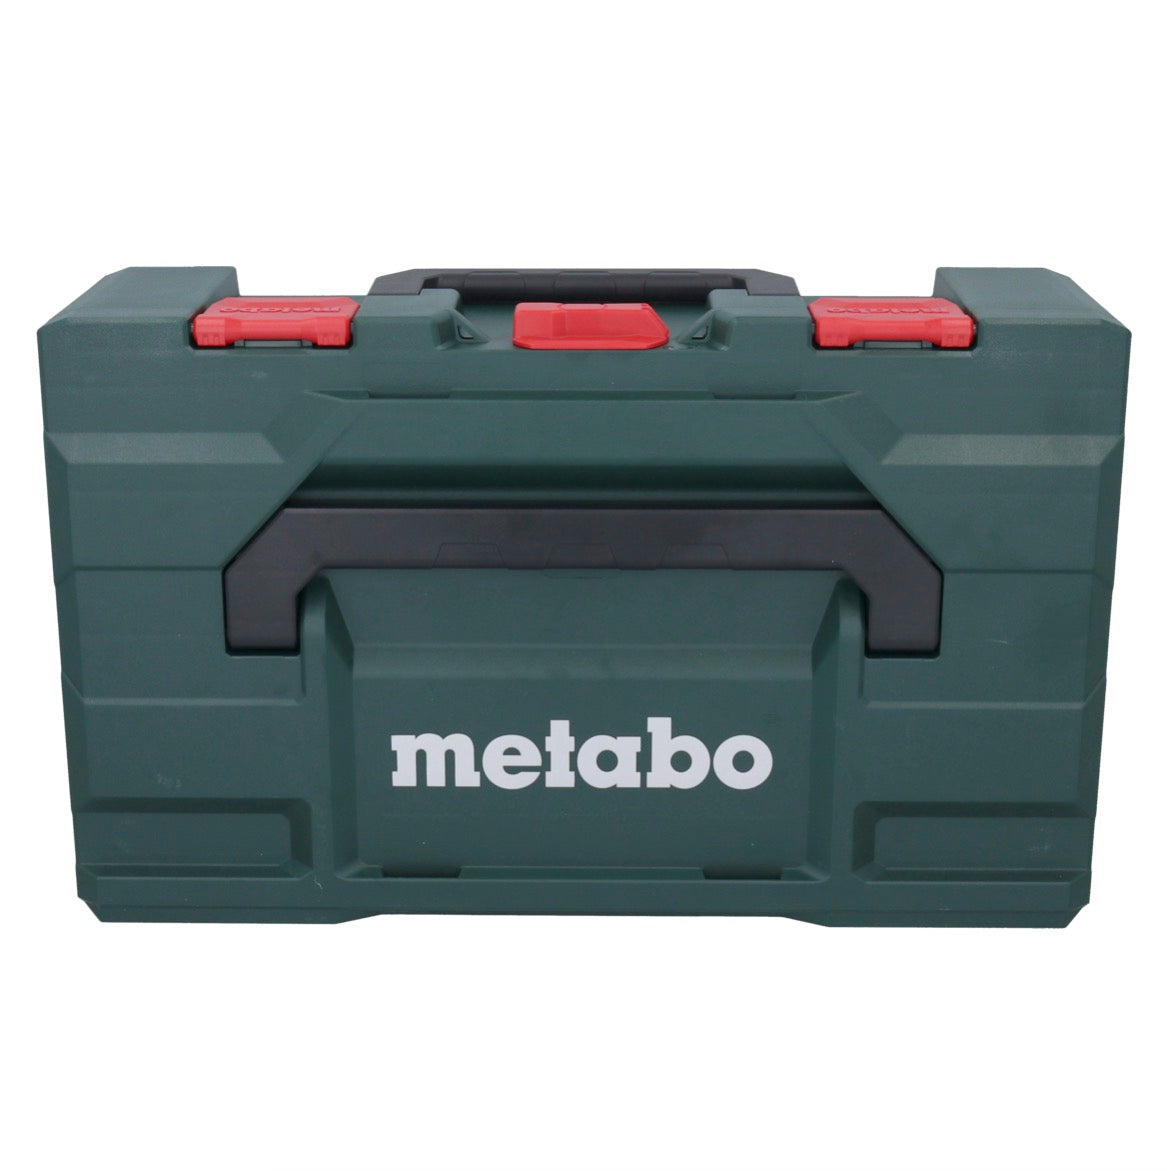 Metabo WPB 18 LT BL 11-125 Quick Akku Winkelschleifer 18 V 125 mm Brushless + 1x Akku 10,0 Ah + metaBOX - ohne Ladegerät - Toolbrothers